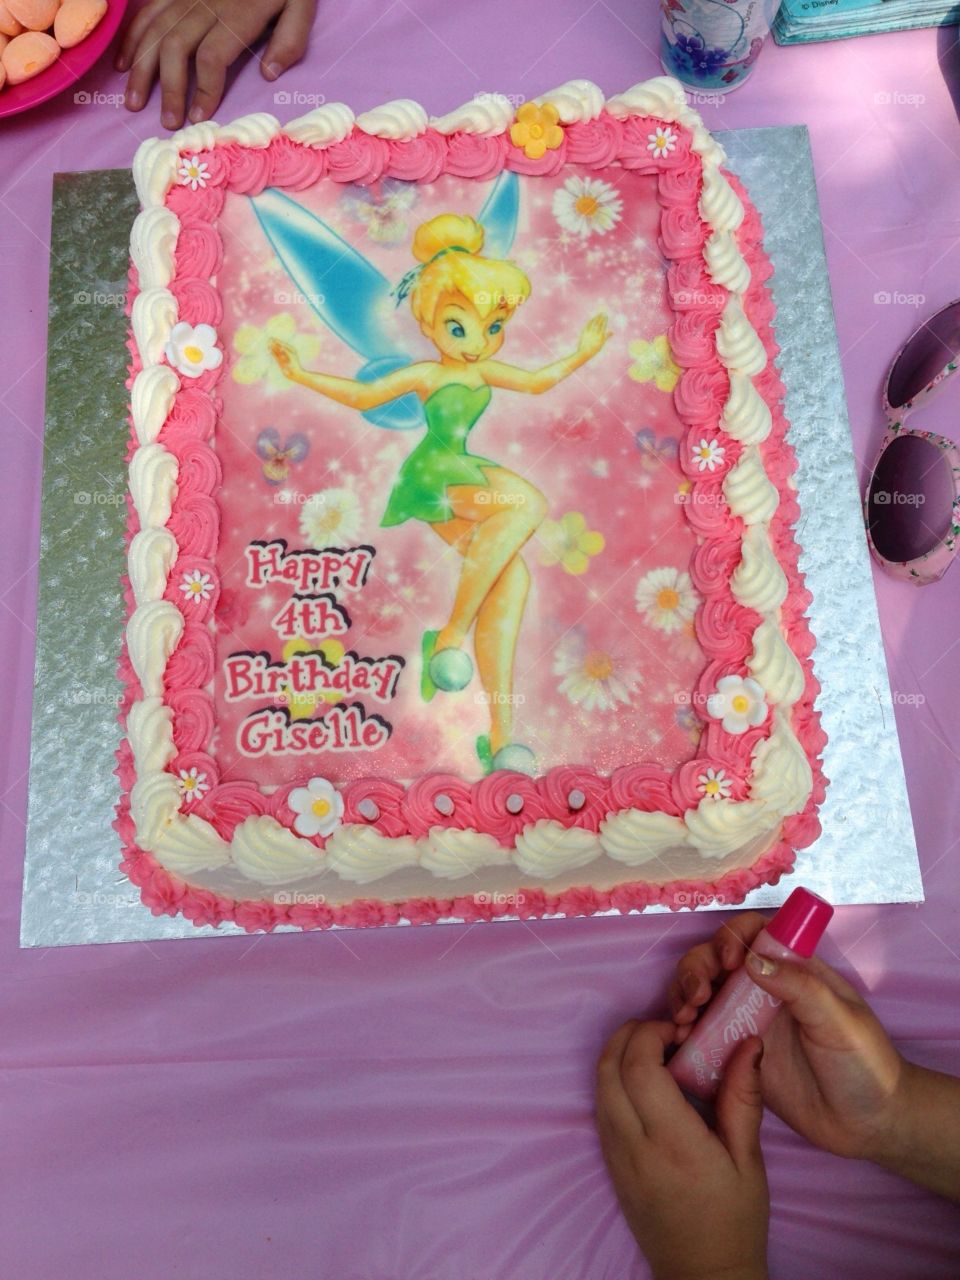 Tinkerbell 4th birthday cake